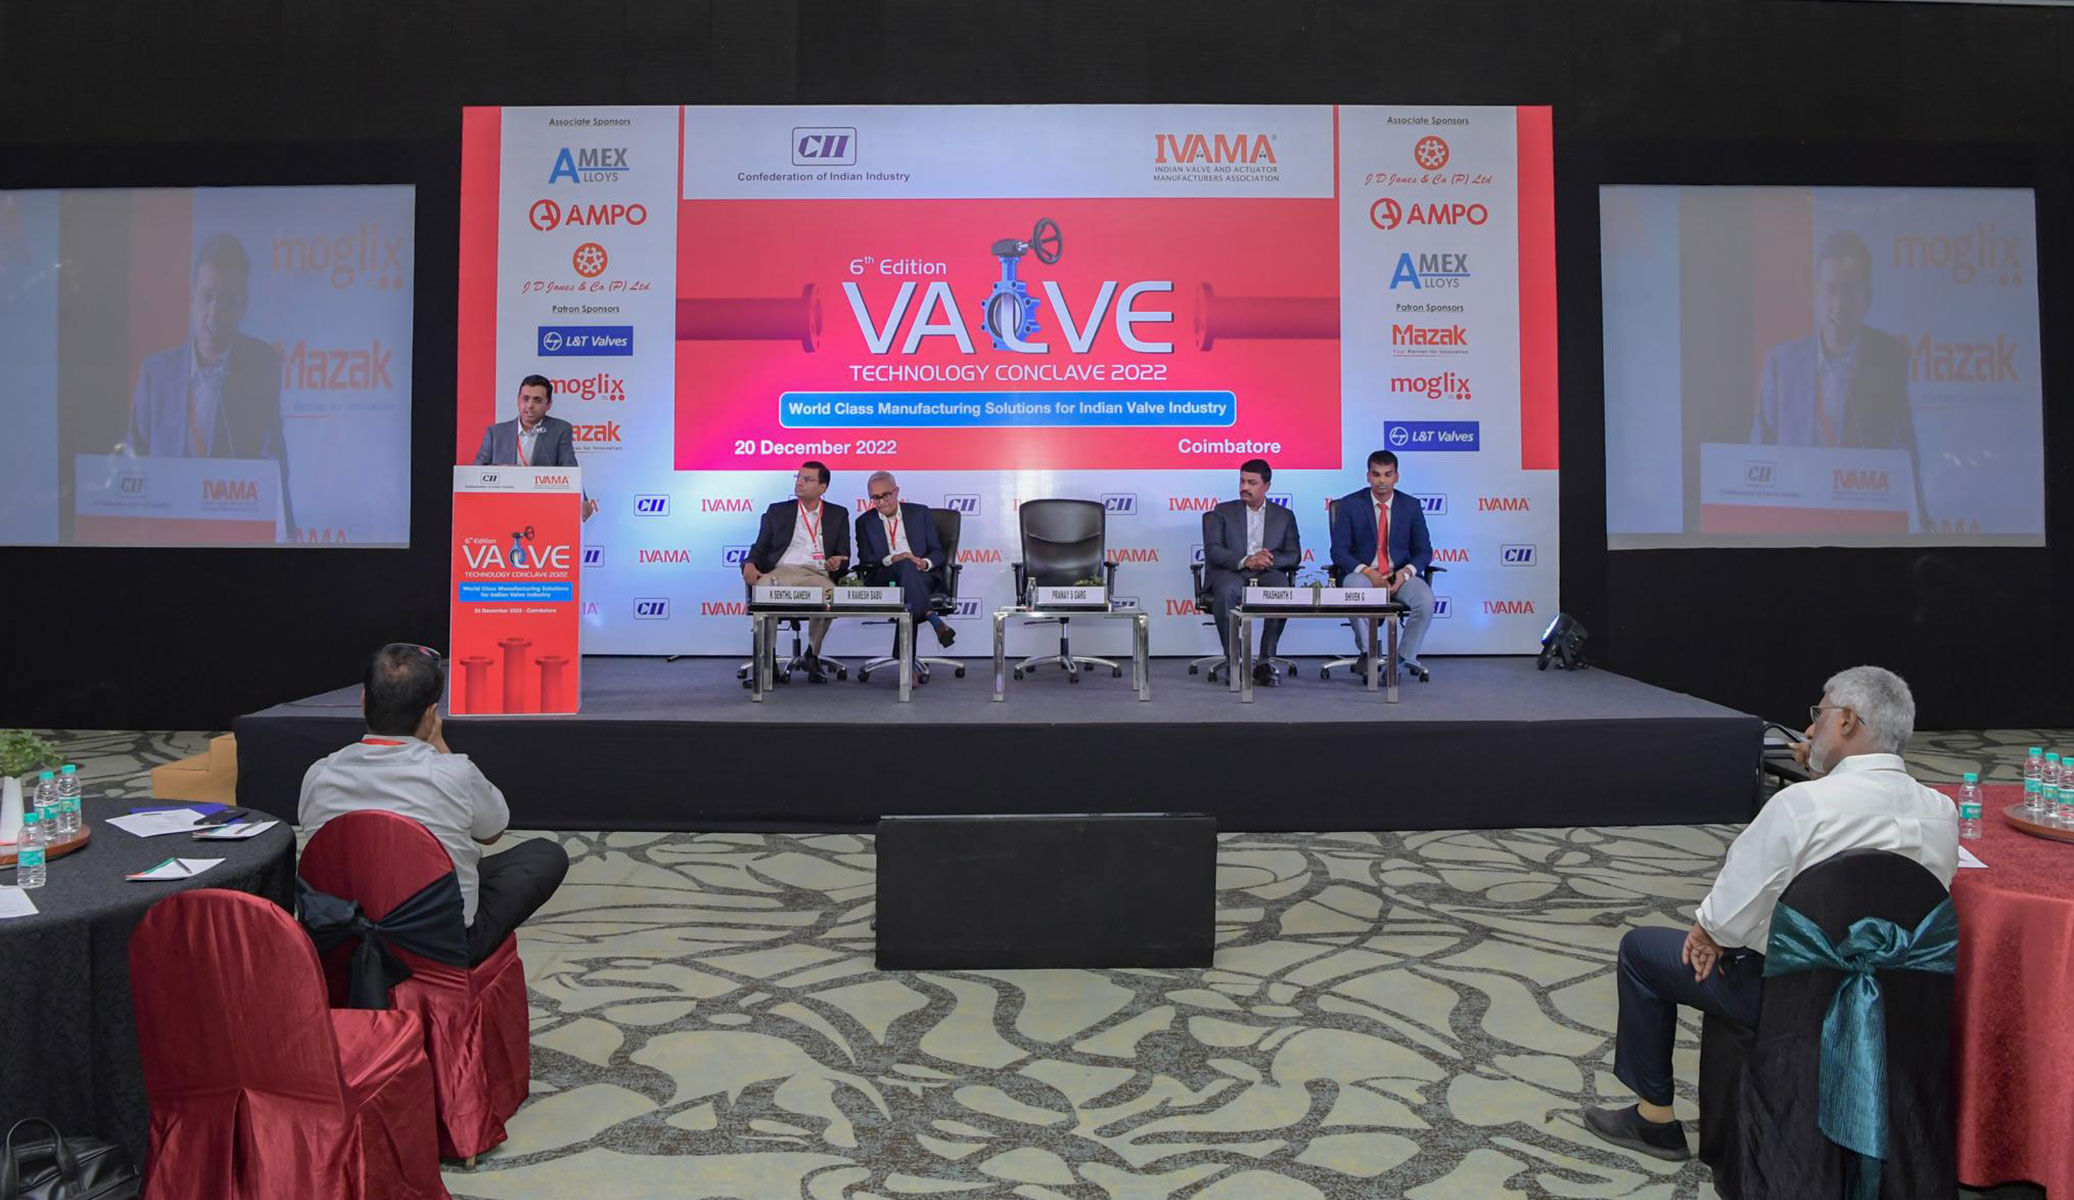 Valve Technology Conclave 2022, IVAMA